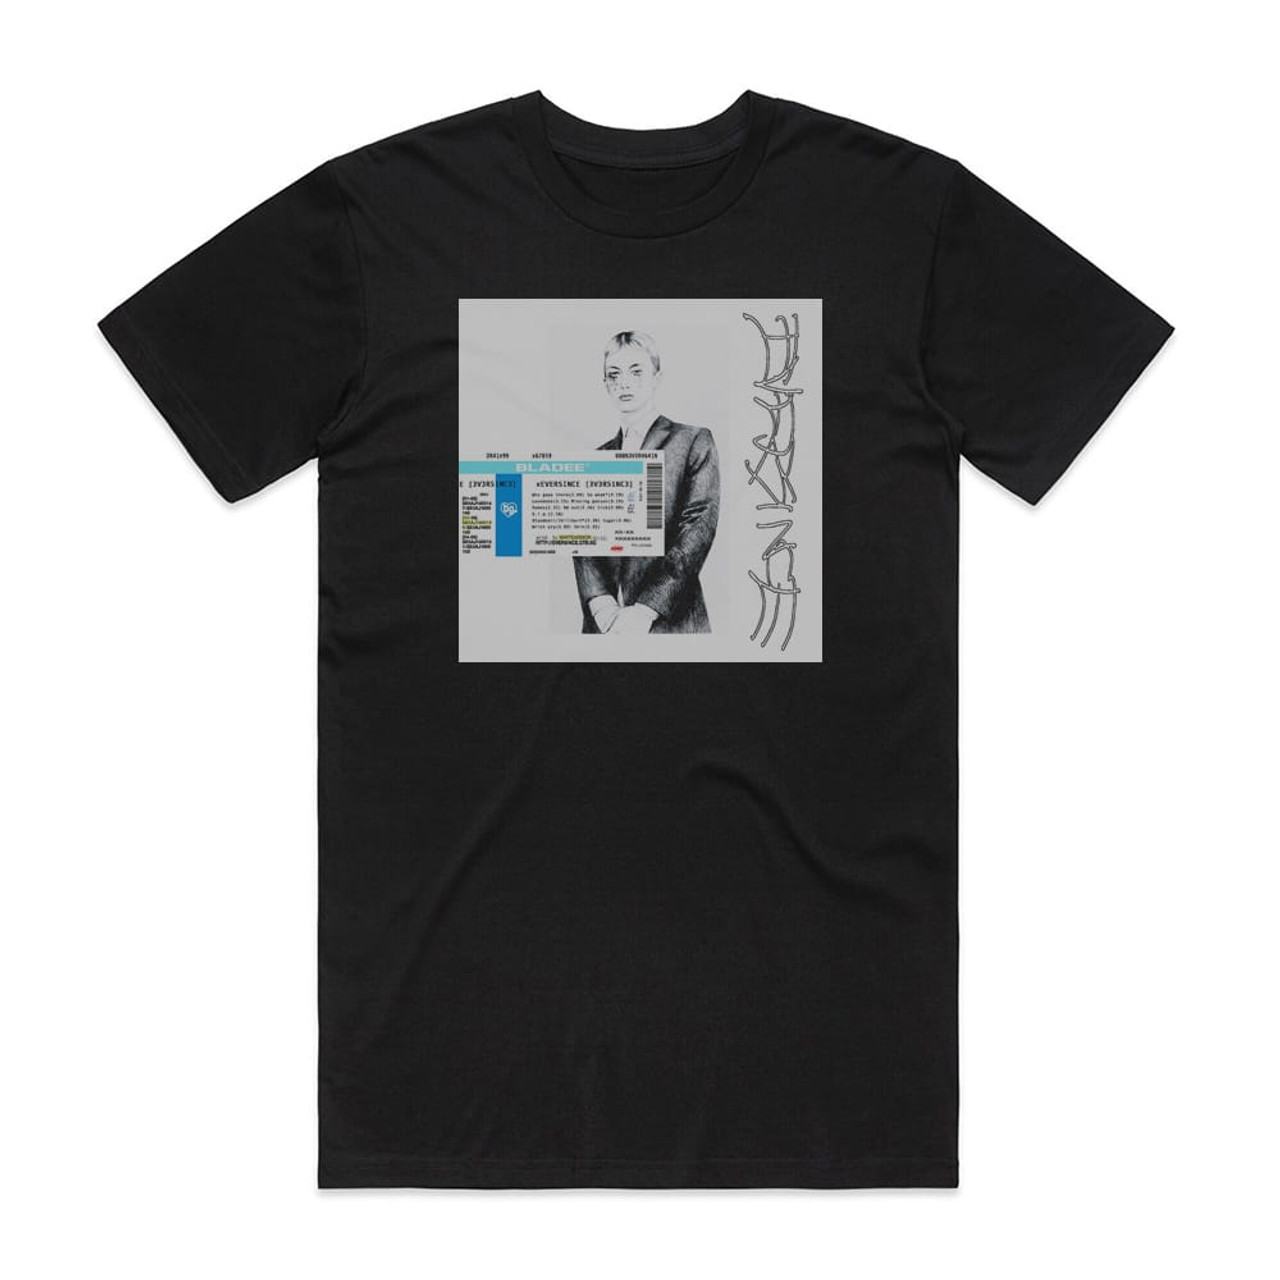 Bladee Eversince Album Cover T-Shirt Black